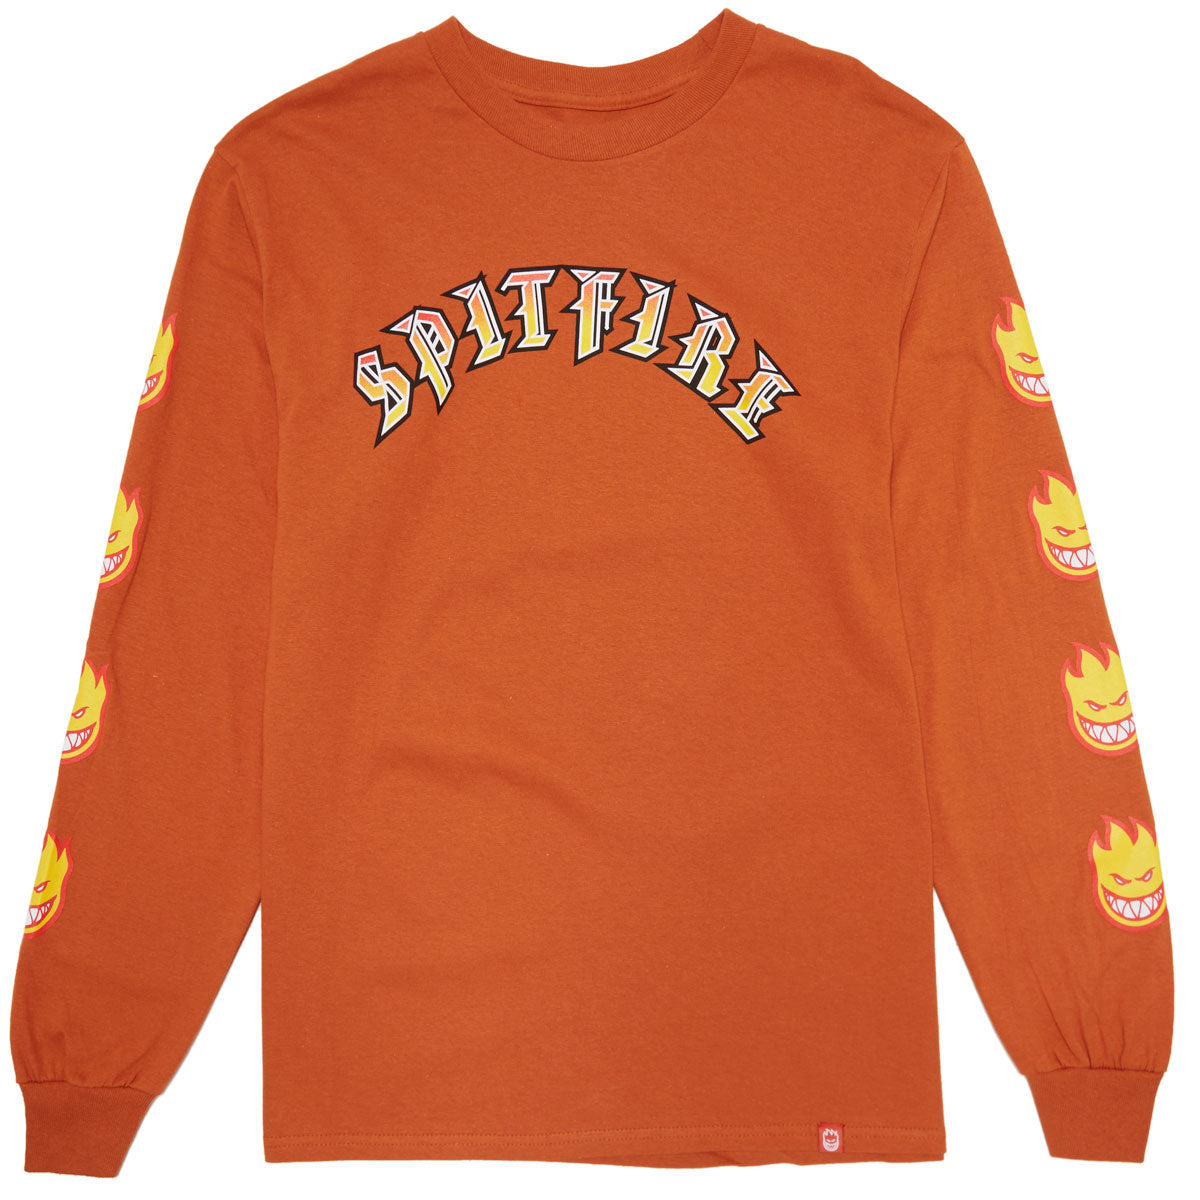 Spitfire Old E Bighead Fill Long Sleeve T-Shirt - Orange/Gold/Red image 1